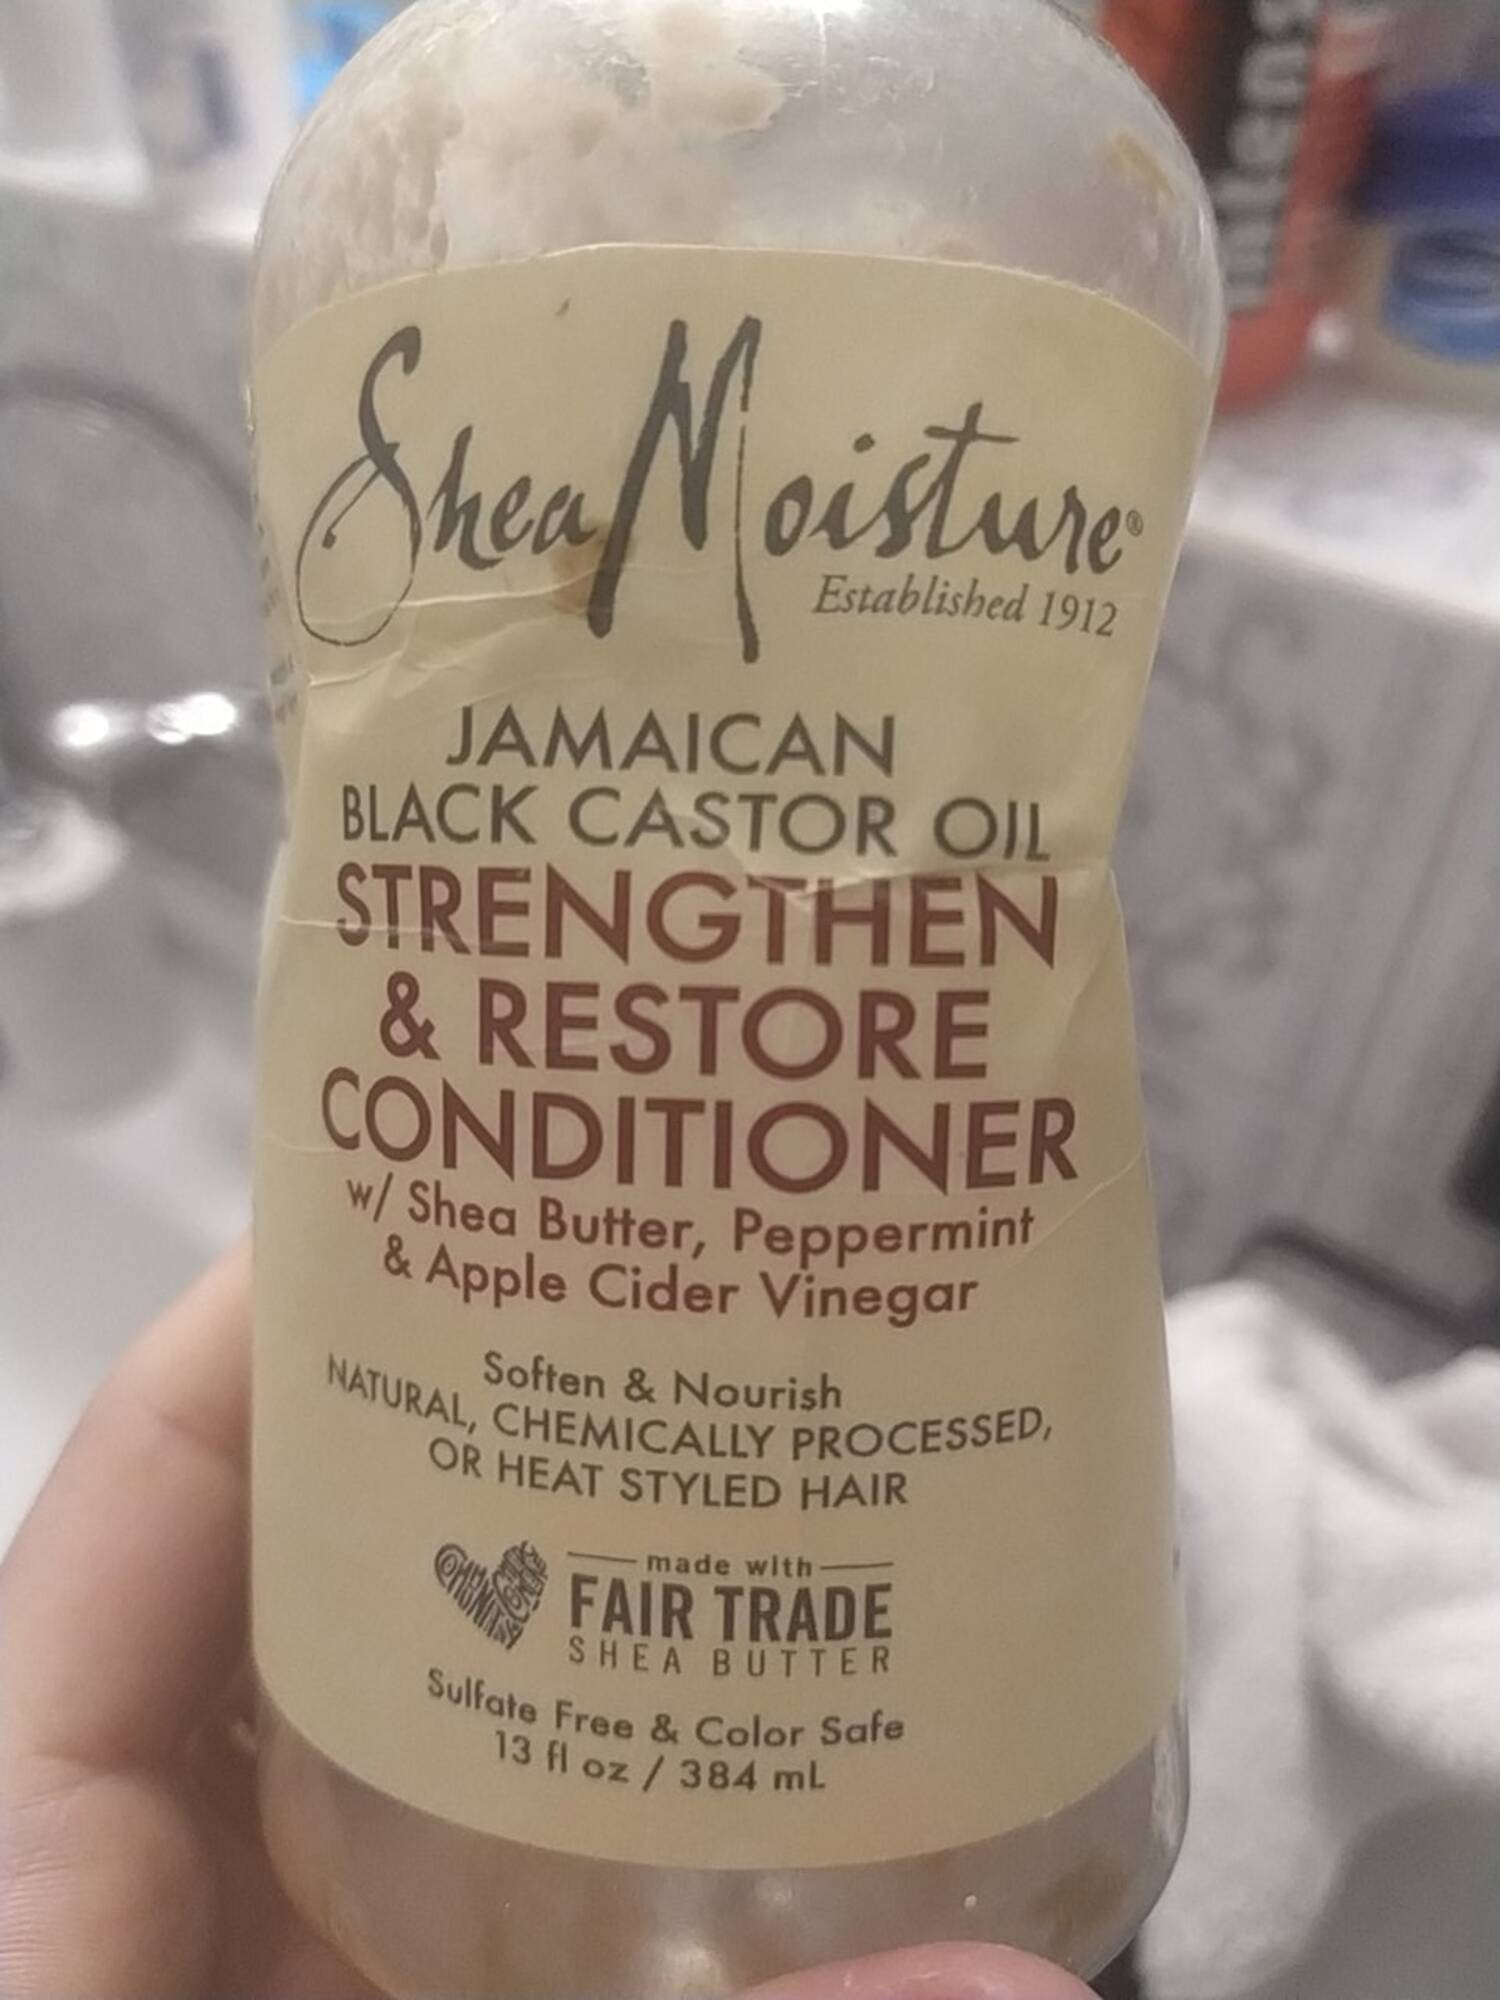 SHEA MOISTURE - Jamaïcain black castor oil